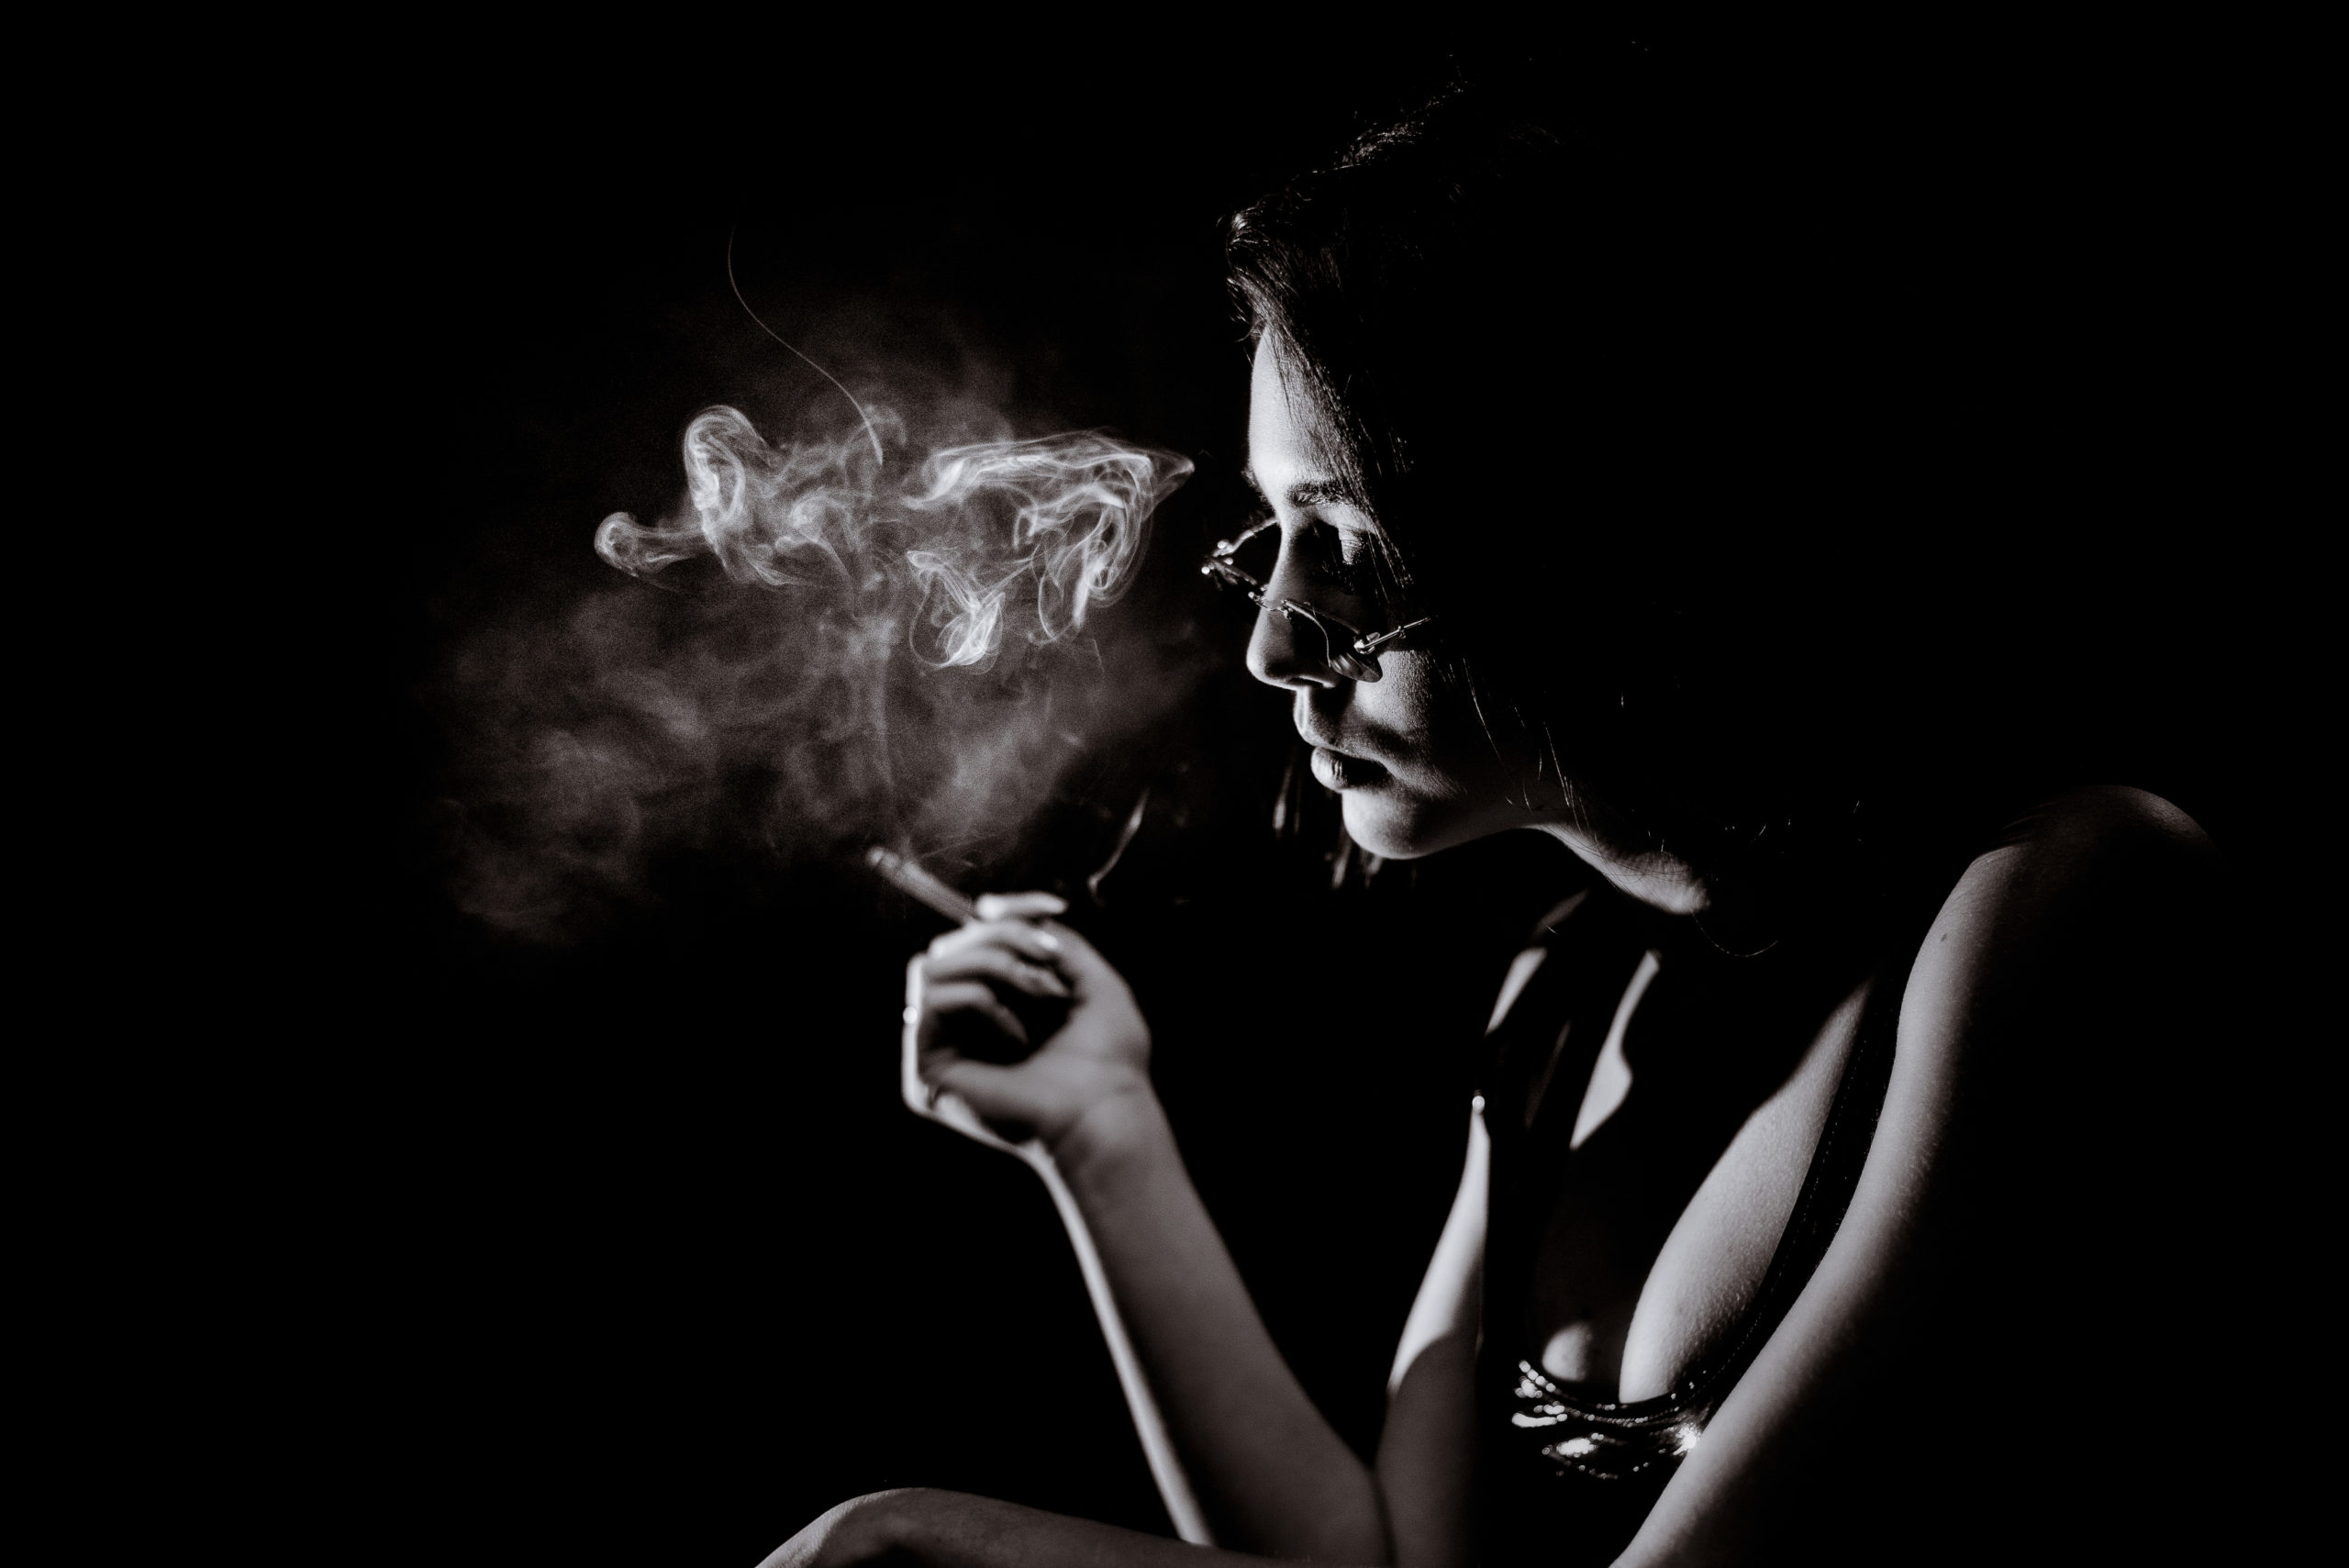 Impact of Smoking on Women’s Health